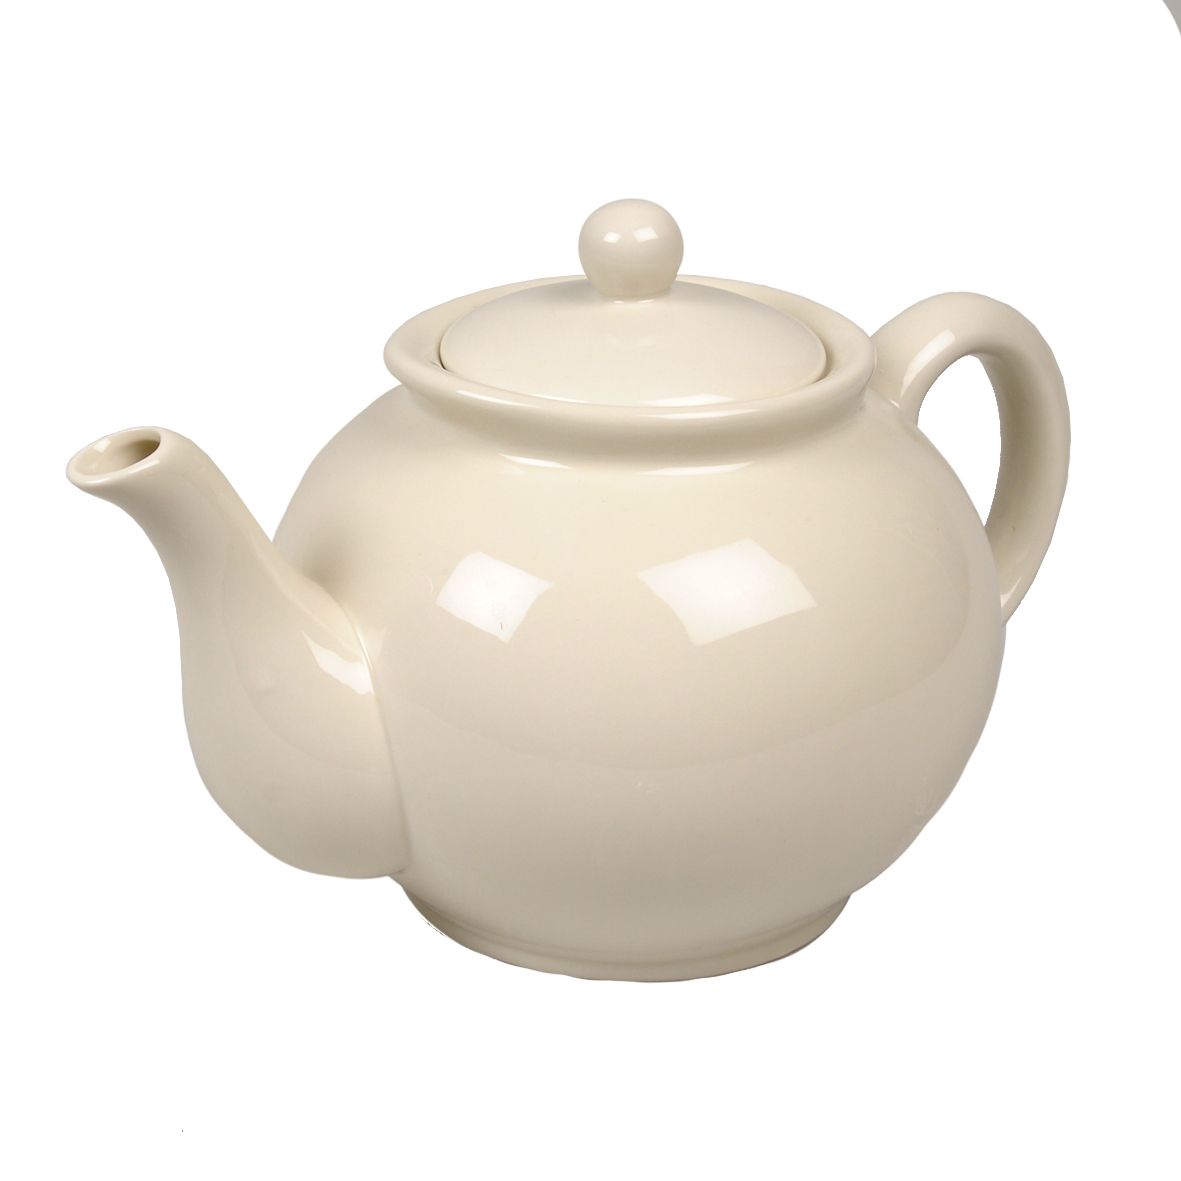 Teapot, porcelain, 2 & Porcelain Kamille | | Dille litres tableware